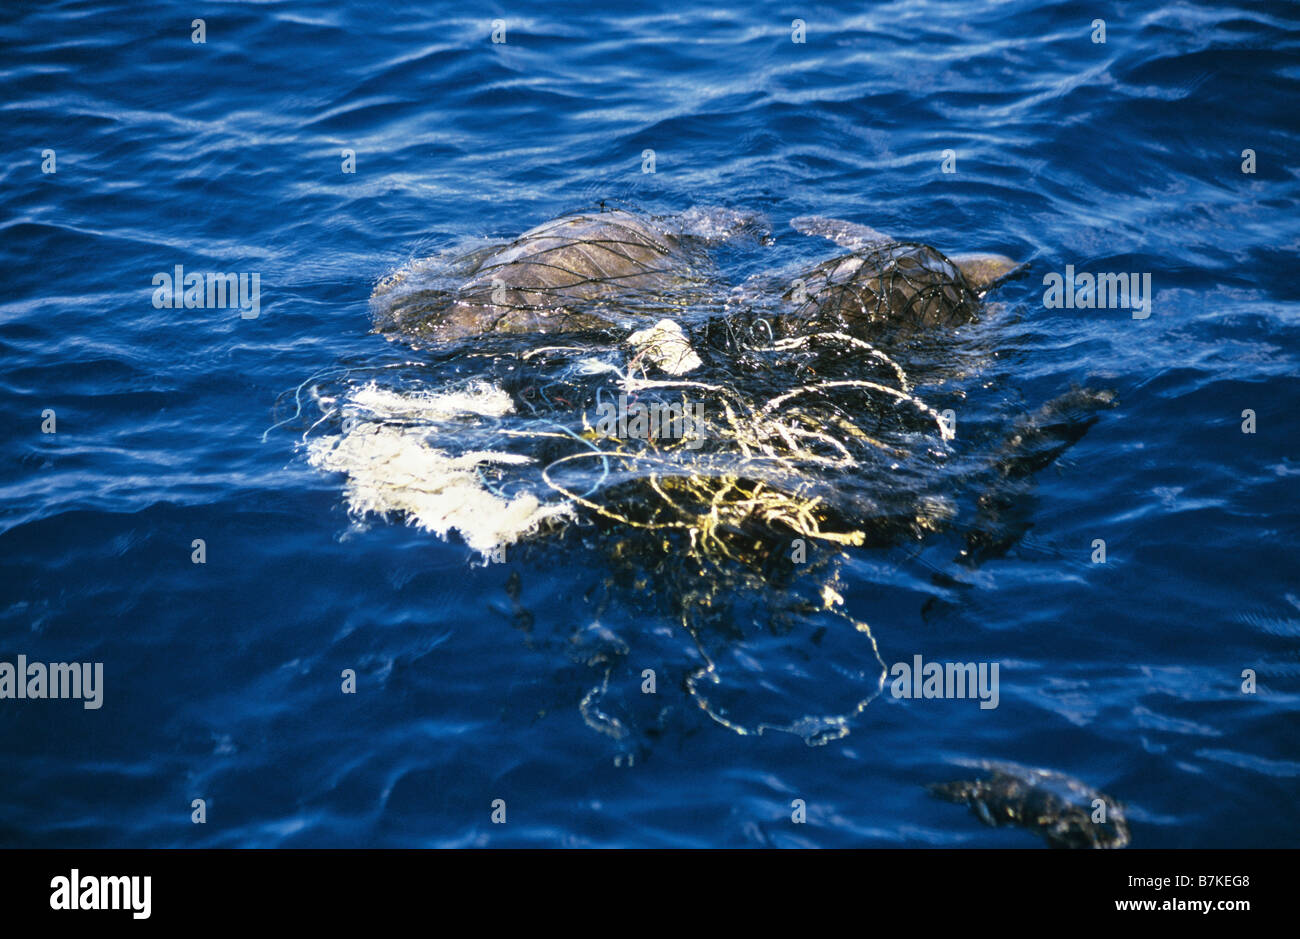 Two olive ridley sea turtles entangled in fishing net, off coast of Sri Lanka Stock Photo